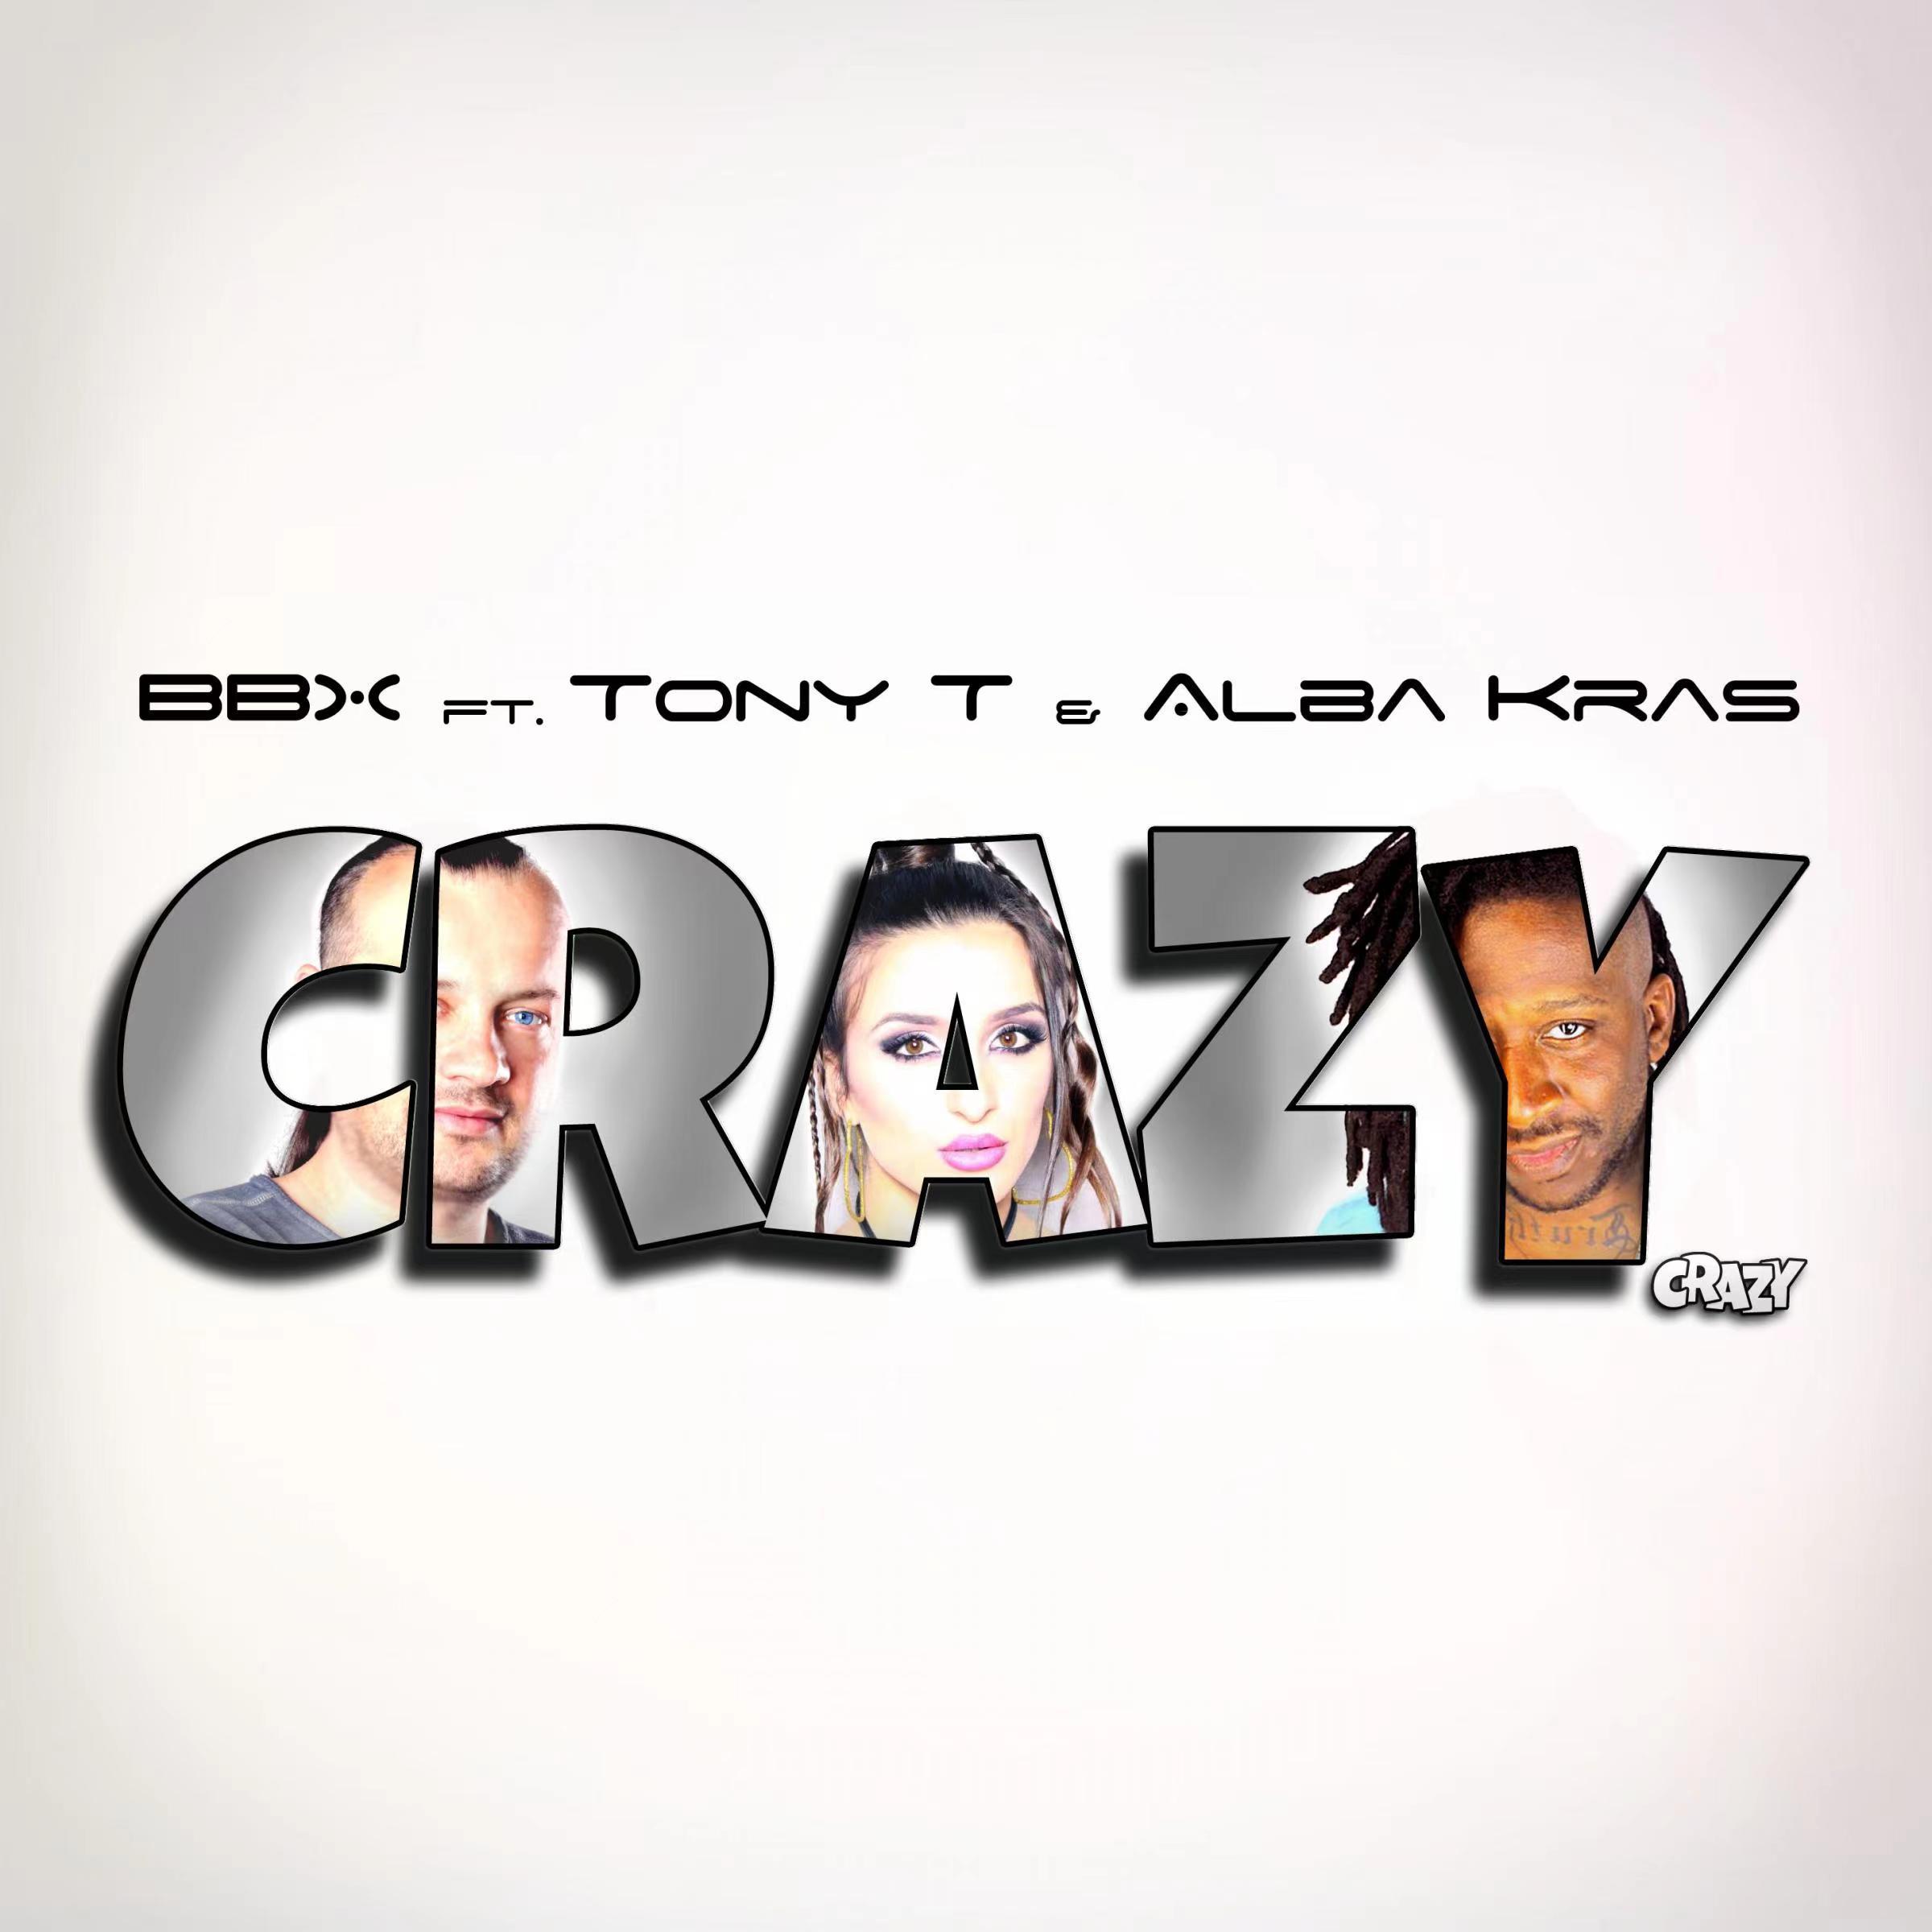 BBX - Crazy